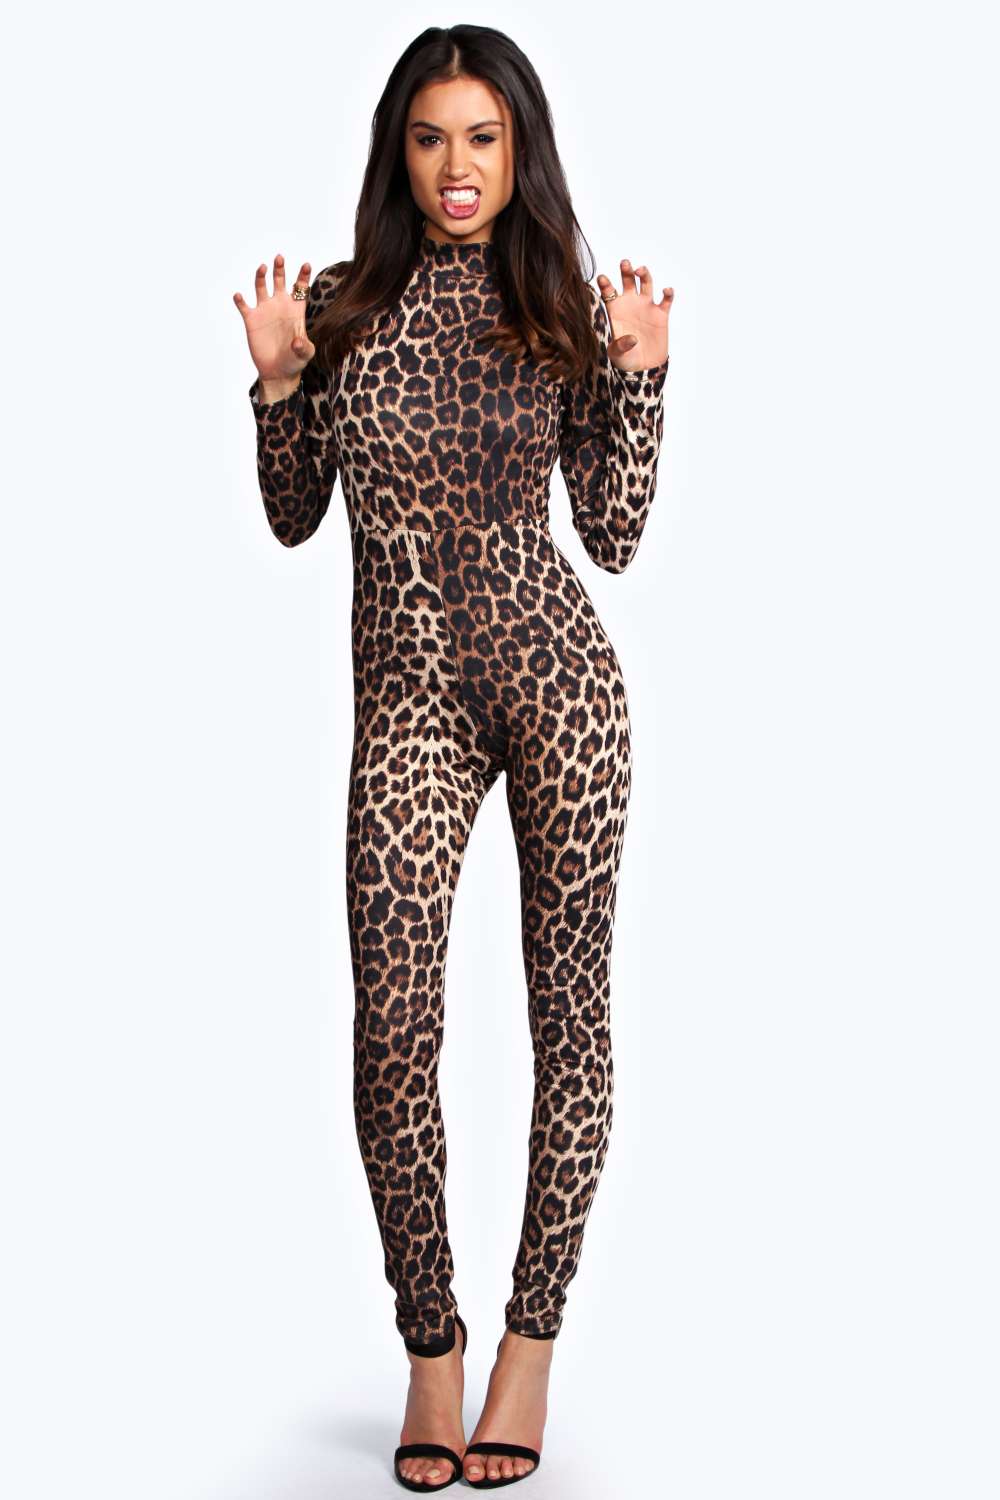 boohoo Roxy Leopard Print Catsuit - brown azz17415